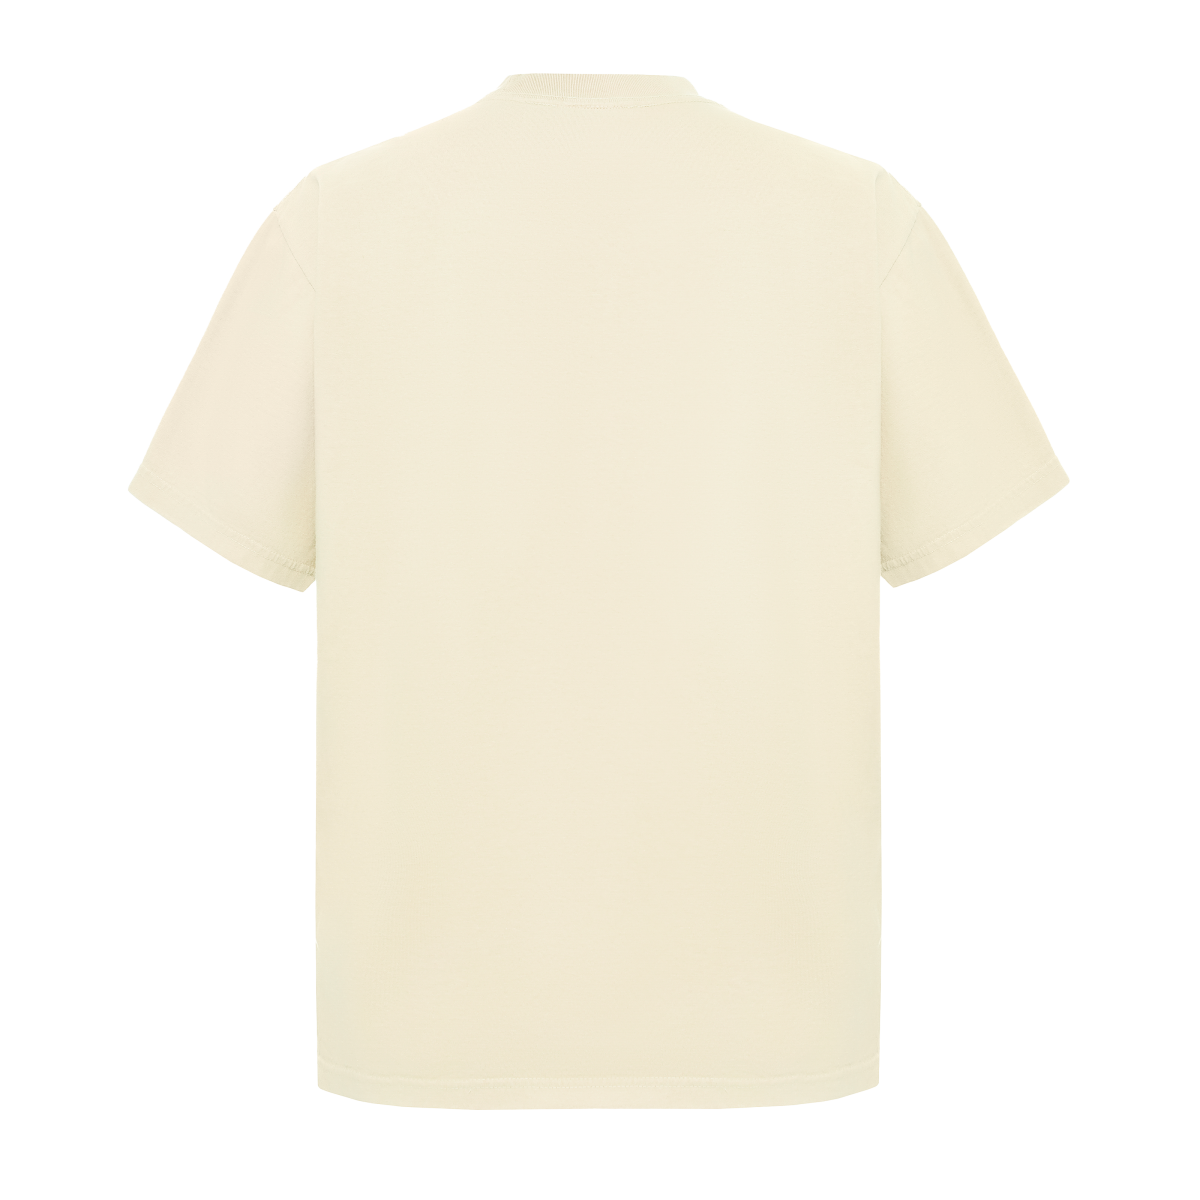 Garment Dye T-Shirt - Standard Size - Cream